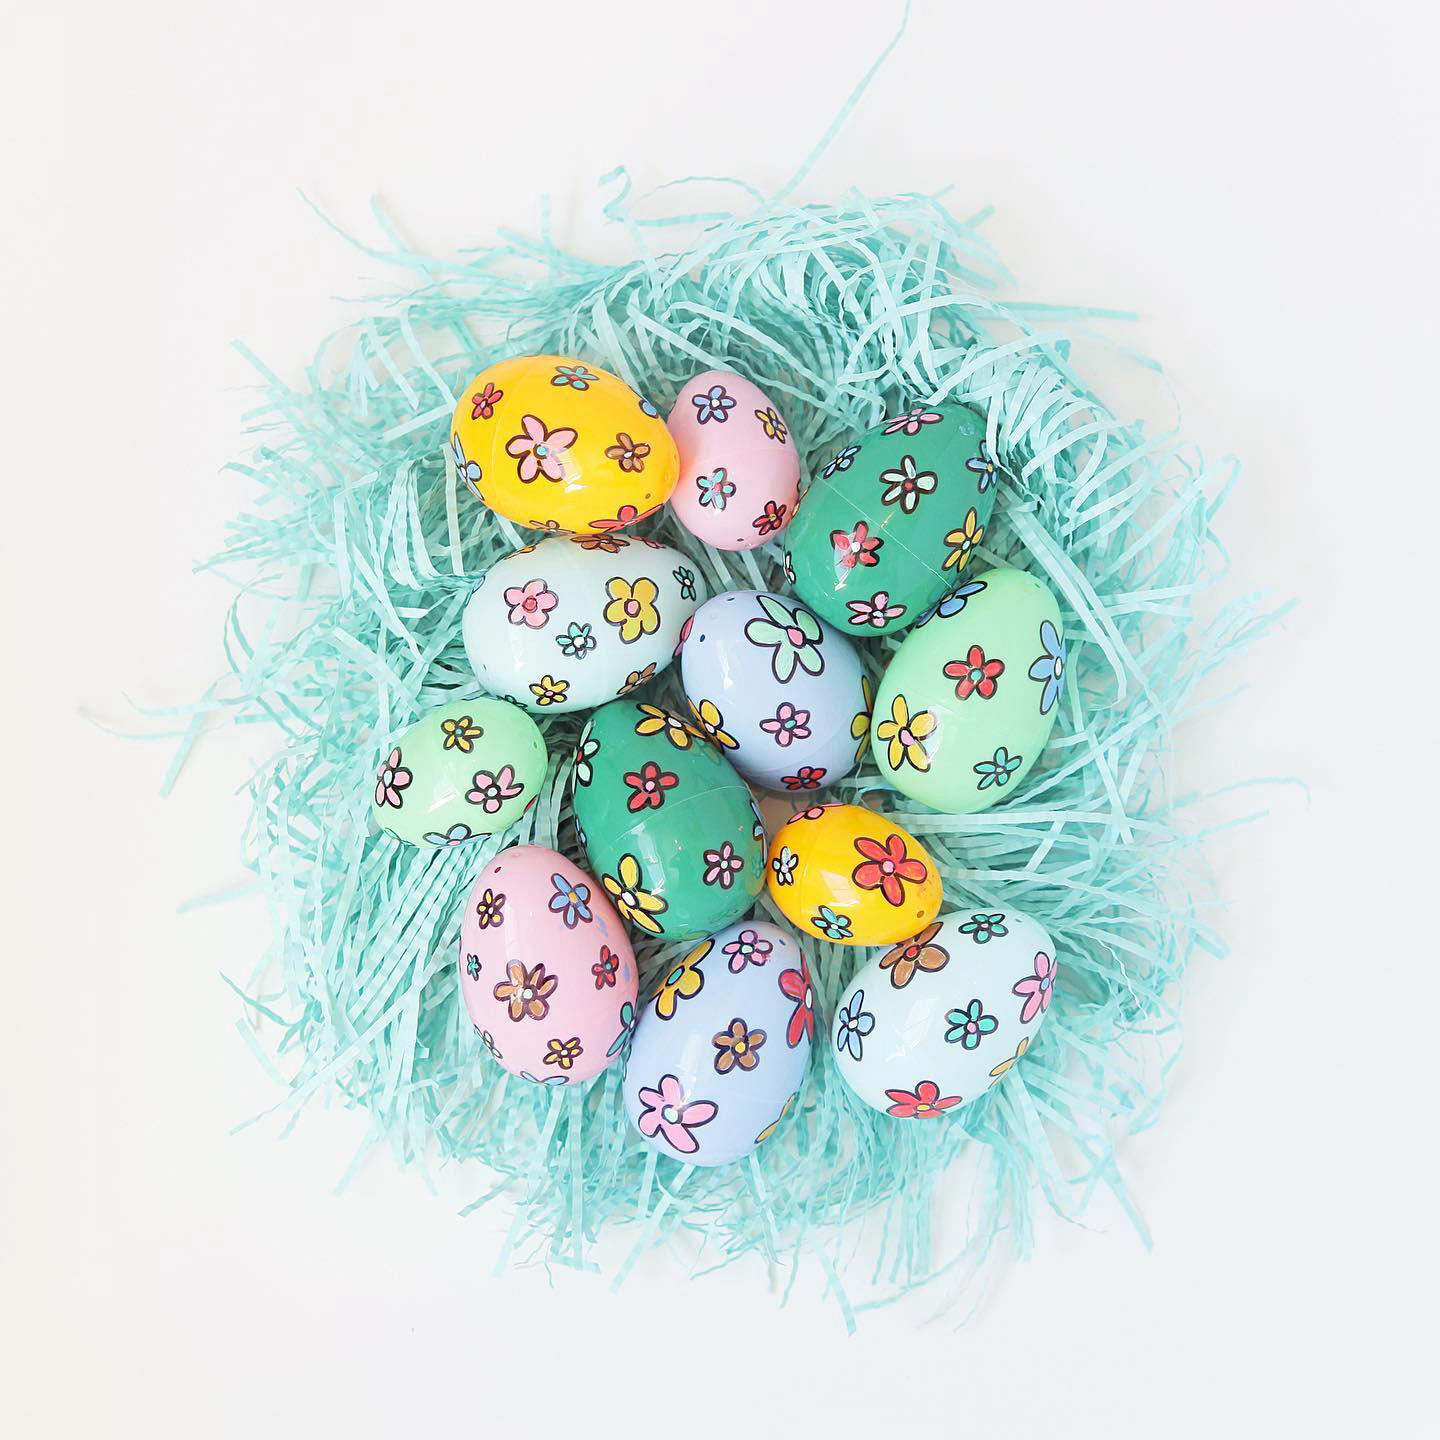 Sara Walk - Painted eggs